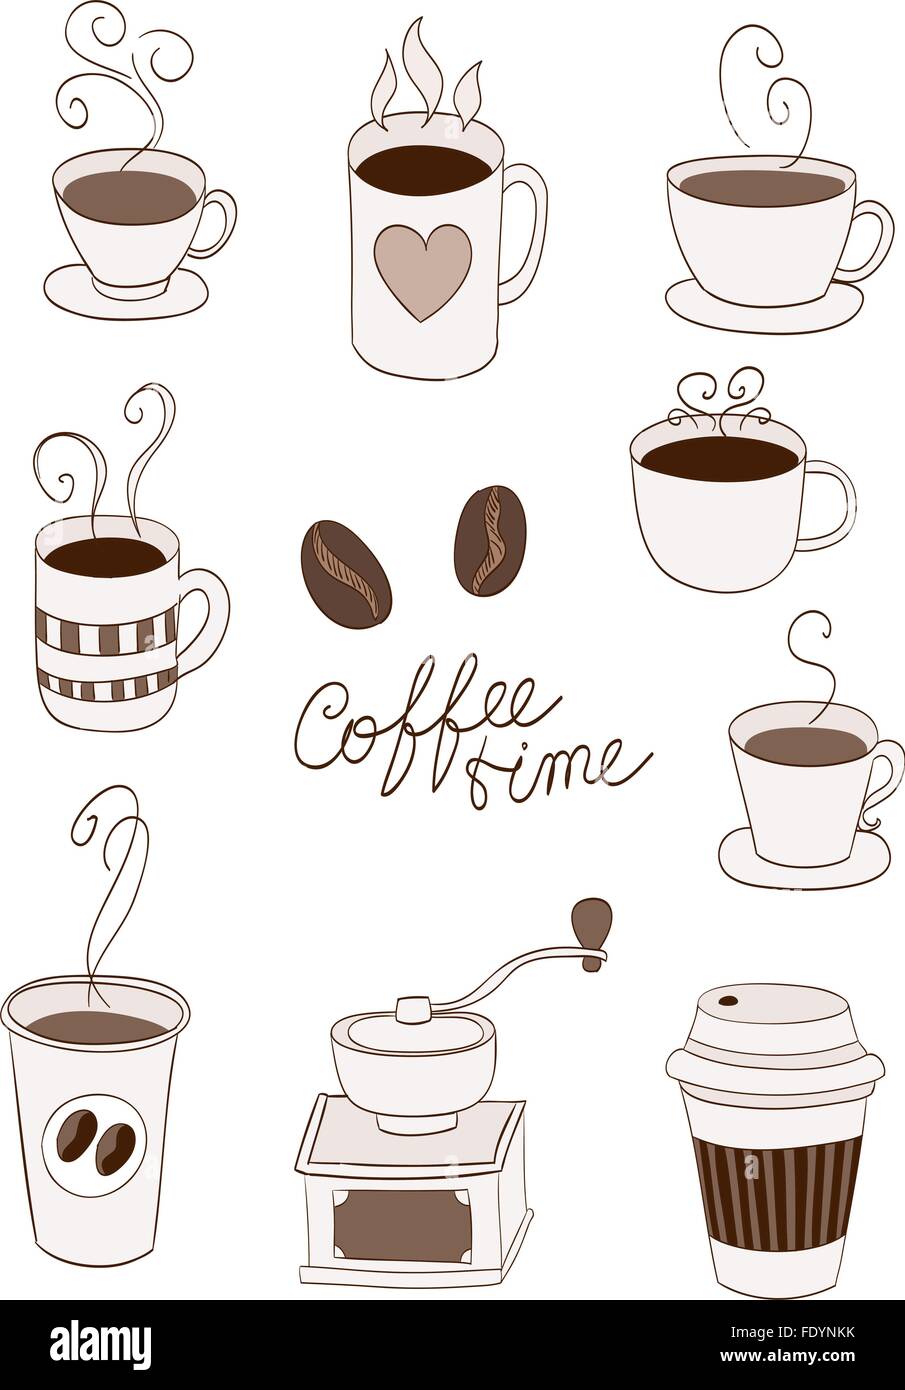 https://c8.alamy.com/comp/FDYNKK/coffee-items-cups-cup-to-go-beans-doodle-FDYNKK.jpg